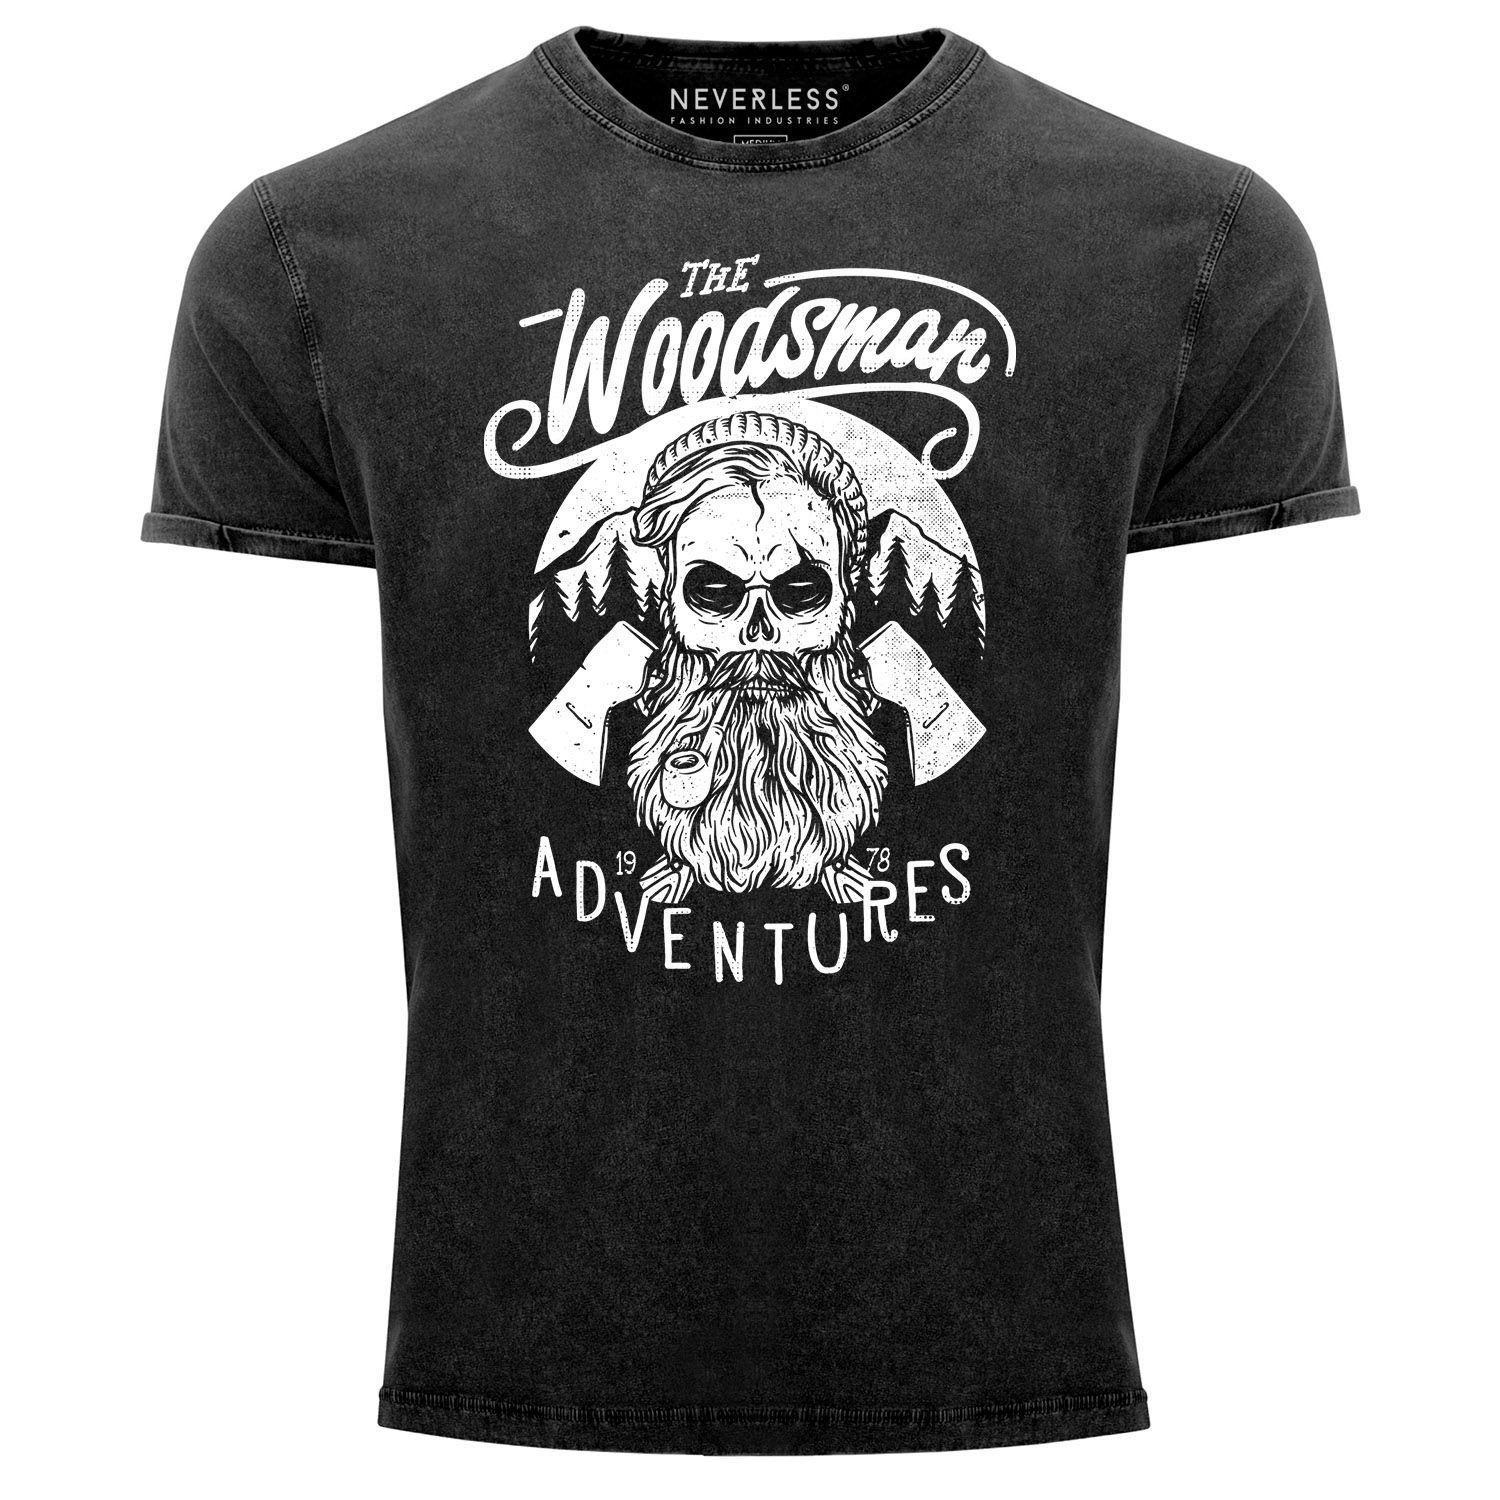 Neverless Print-Shirt Cooles Angesagtes Herren T-Shirt Vintage Shirt Lumberjack Woodsman Hipster Bart Skull Aufdruck Used Look Slim Fit Neverless® mit Print schwarz